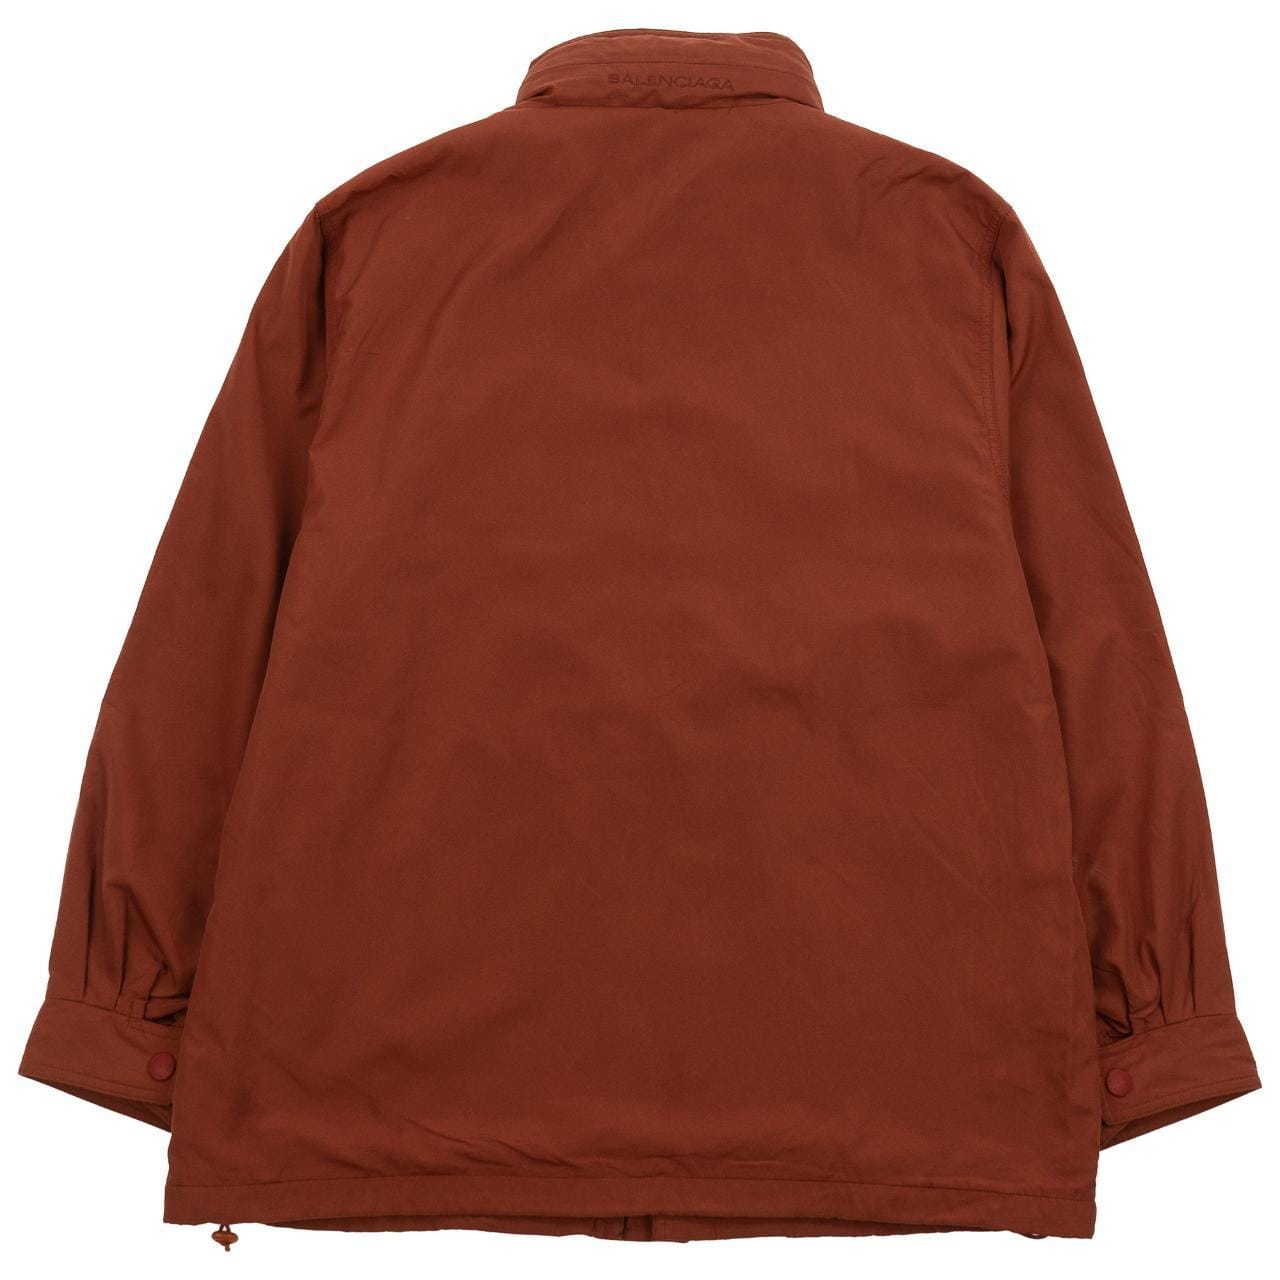 Wool jacket Balenciaga Beige size M International in Wool  20153795